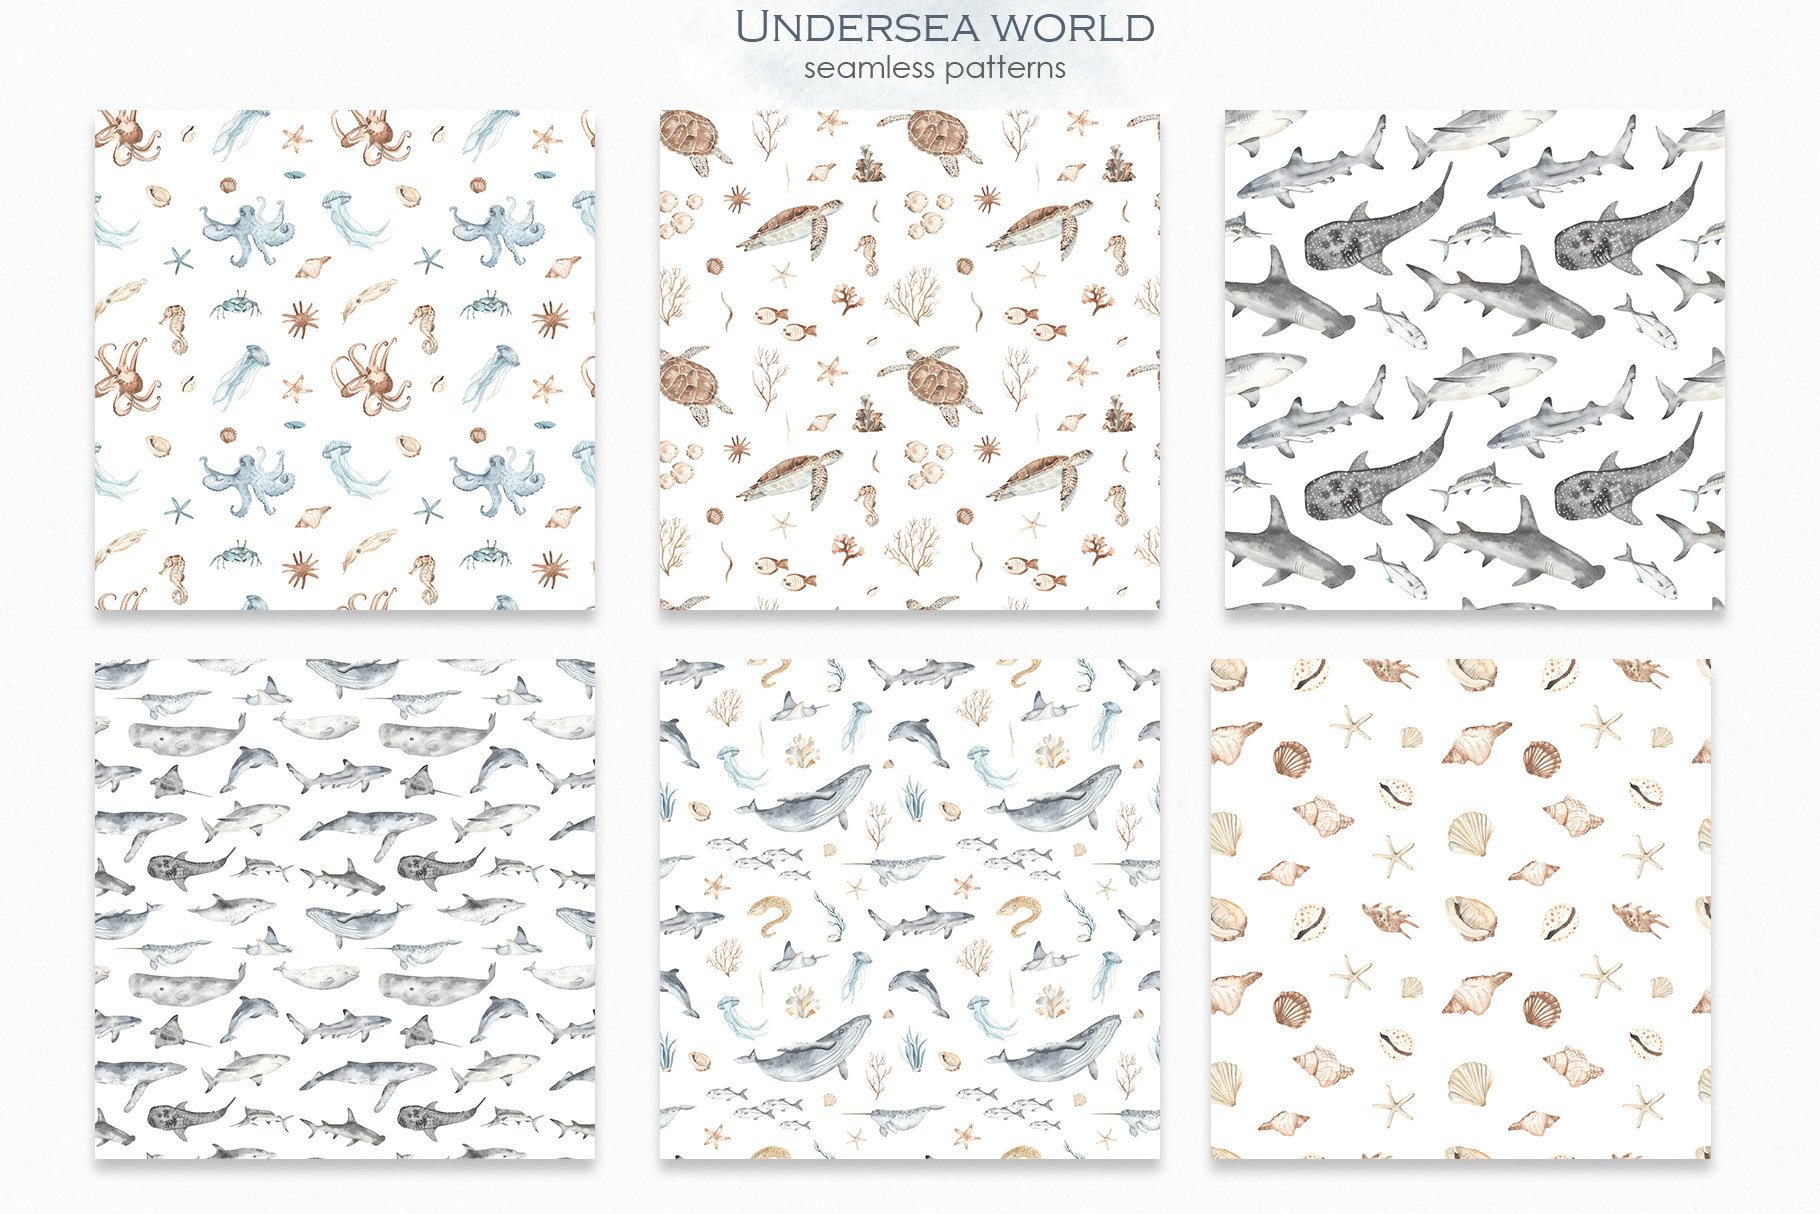 10 watercolor underwater world seamless patterns 408